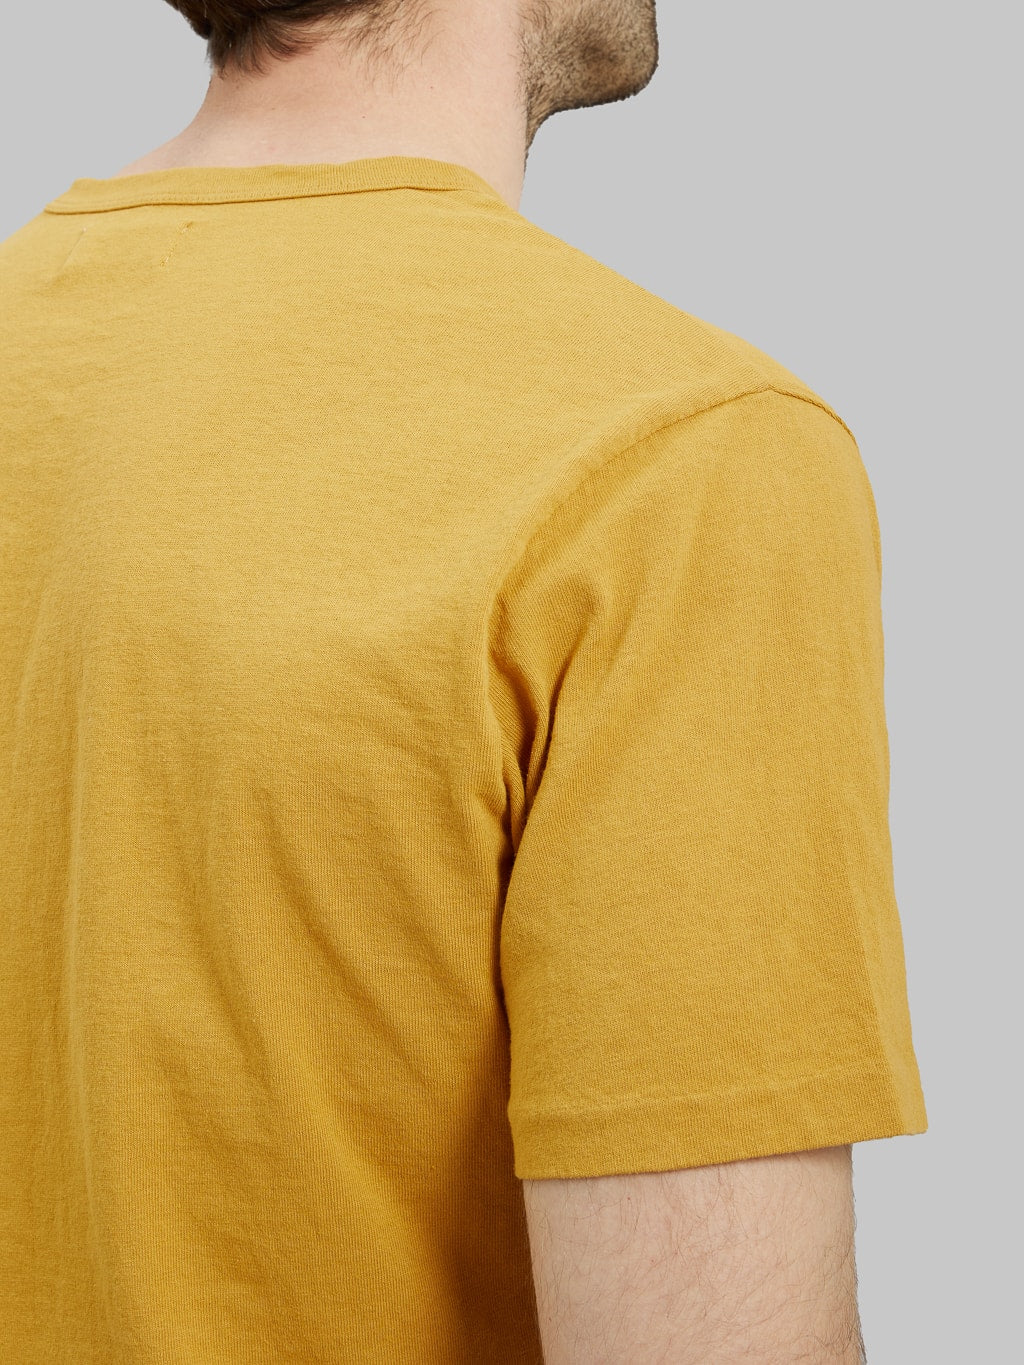 freenote cloth 9 ounce pocket t shirt mustard heavyweight sleeve